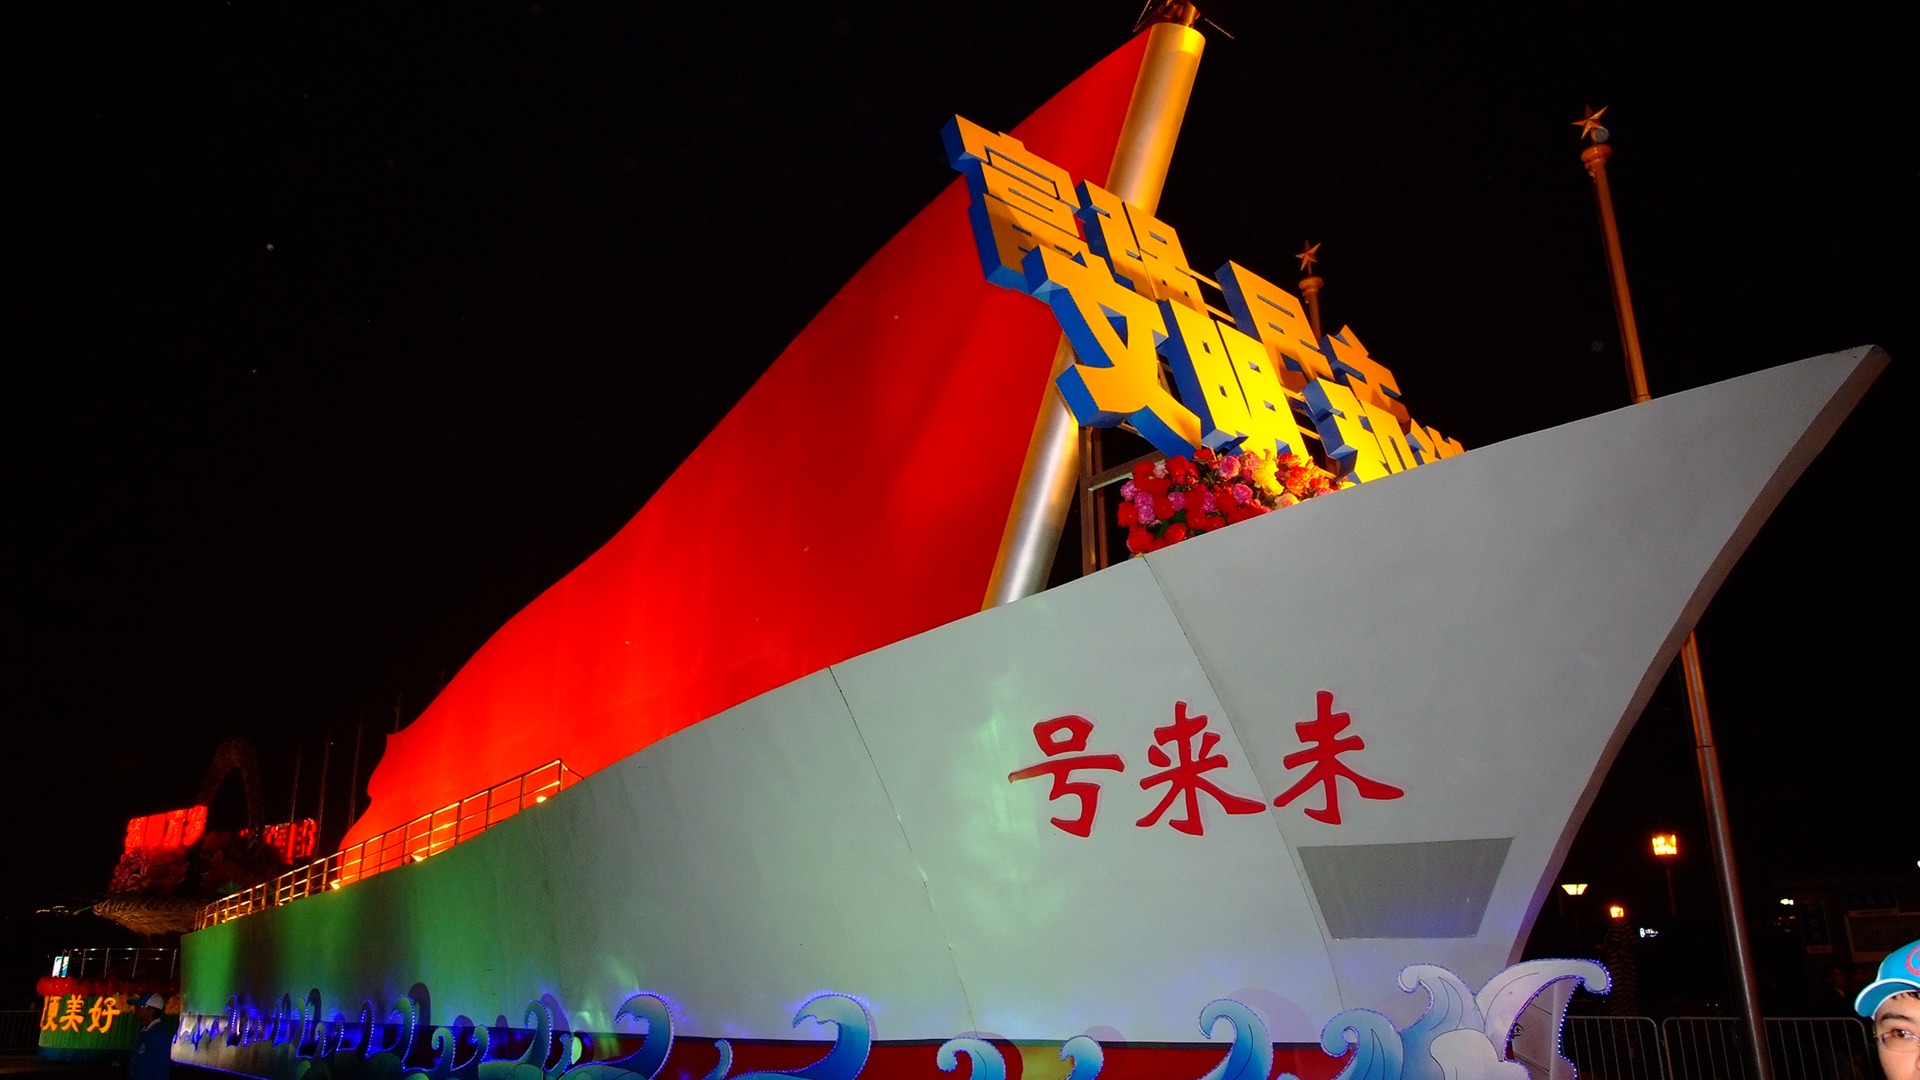 На площади Тяньаньмэнь красочные ночь (арматурных работ) #31 - 1920x1080